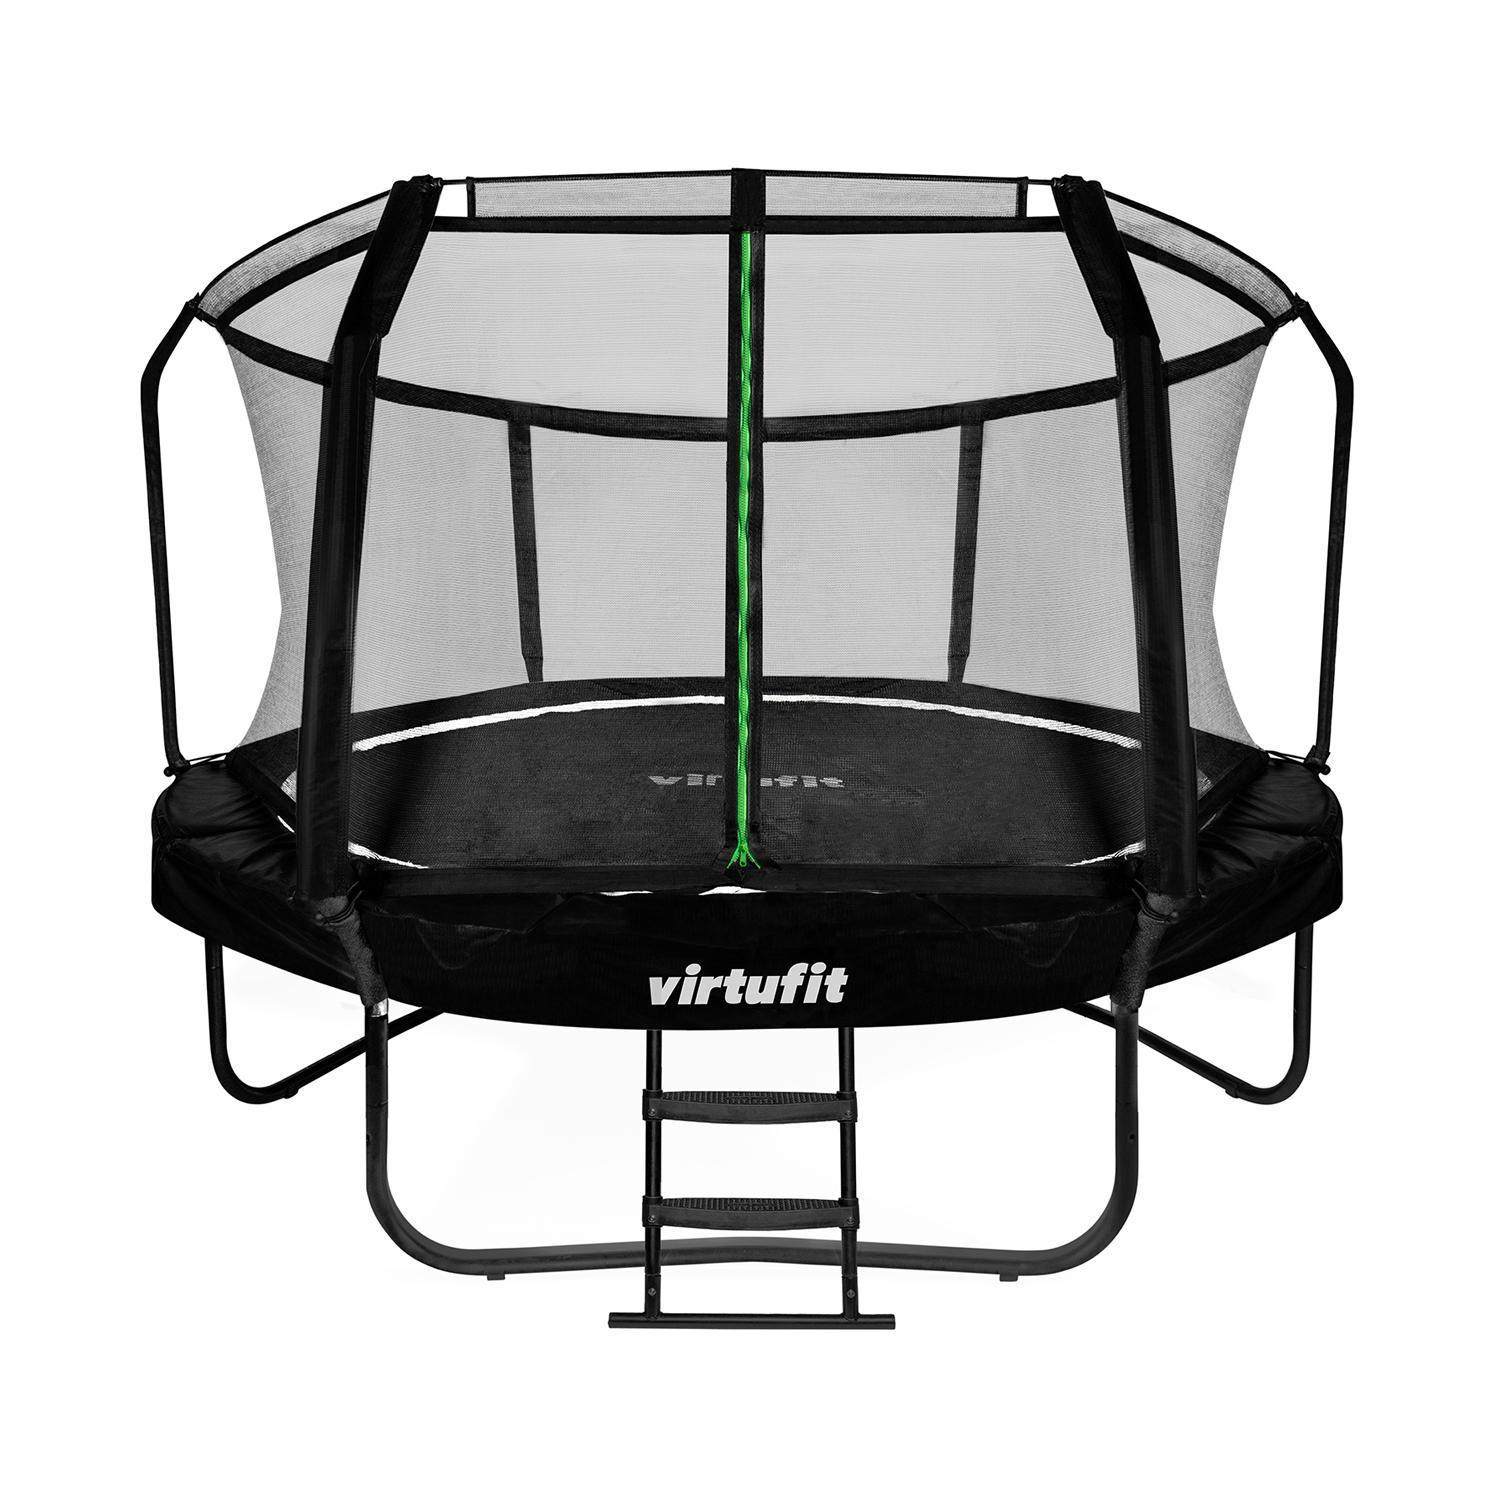 Optimisme Uitwisseling Appal VirtuFit Premium Trampoline - 366 cm - Virtufit